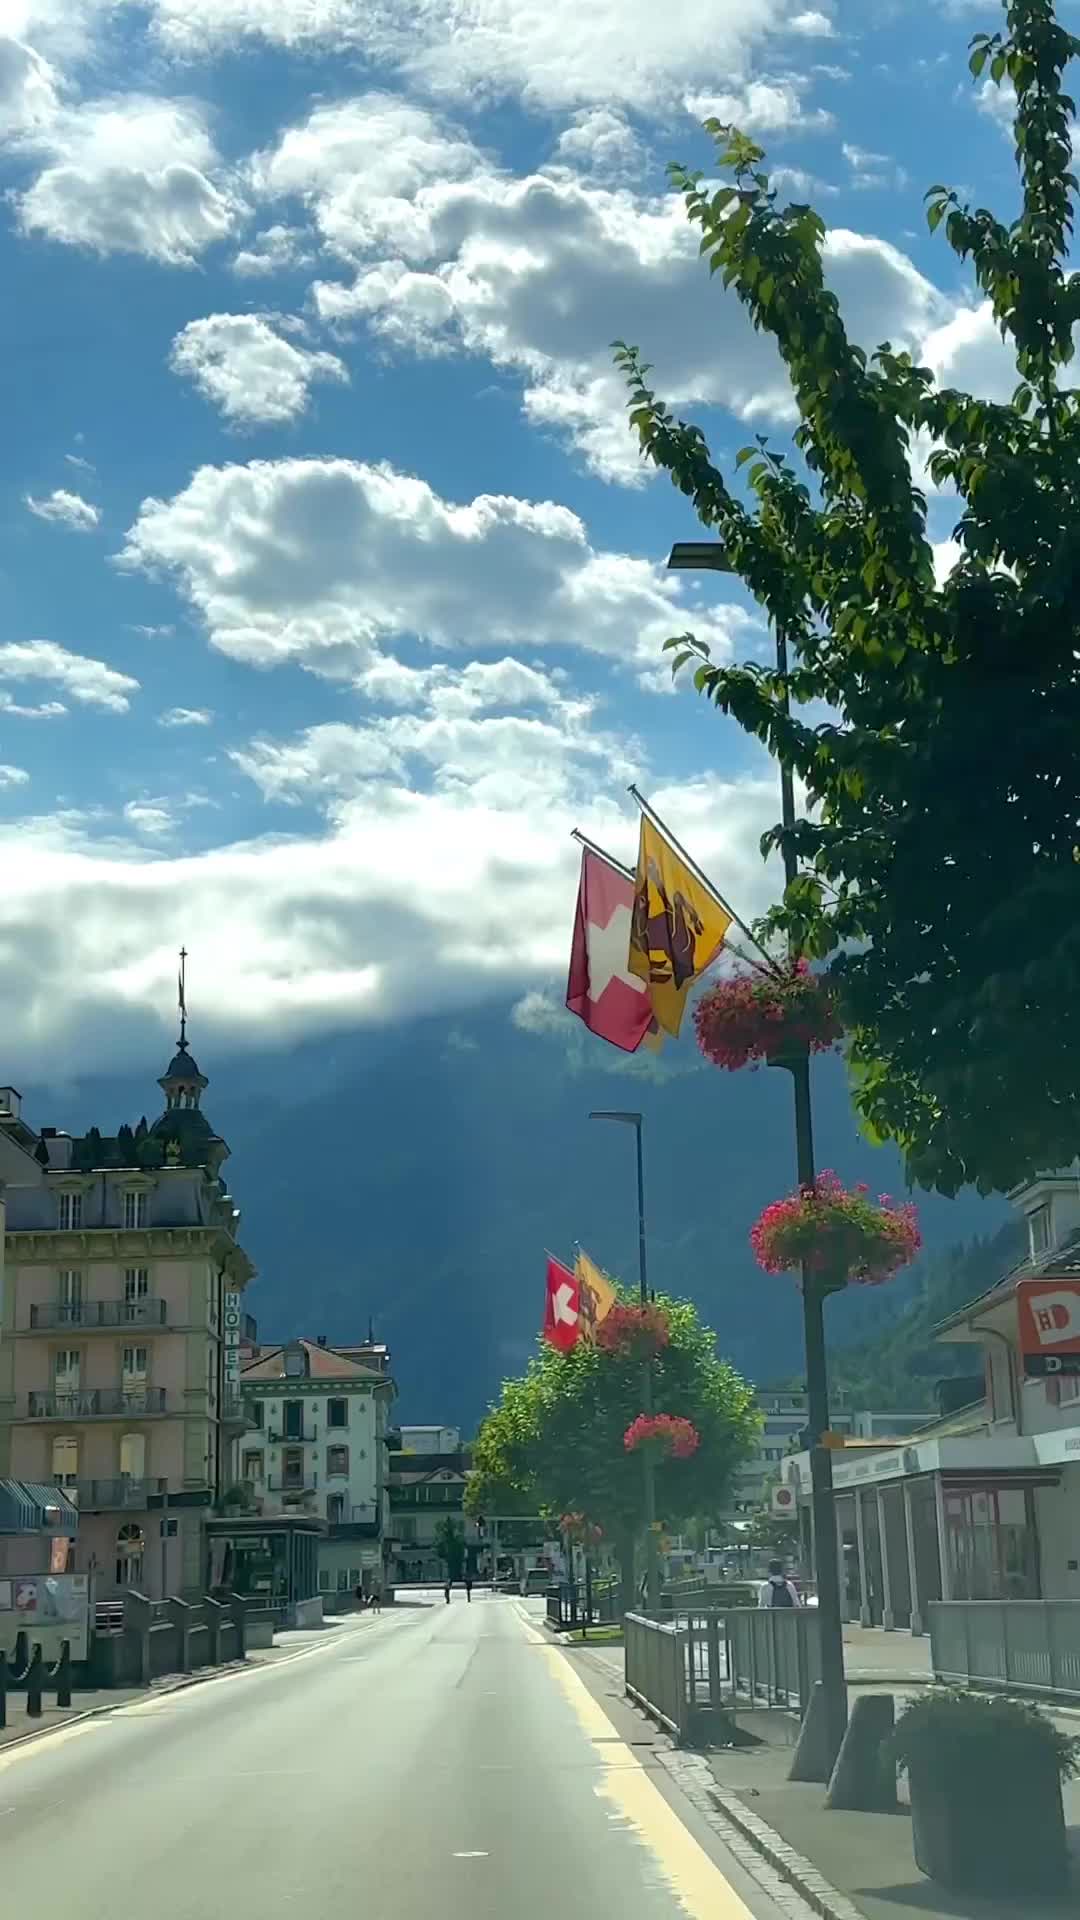 A Perfect Daydream in Sachseln, Switzerland